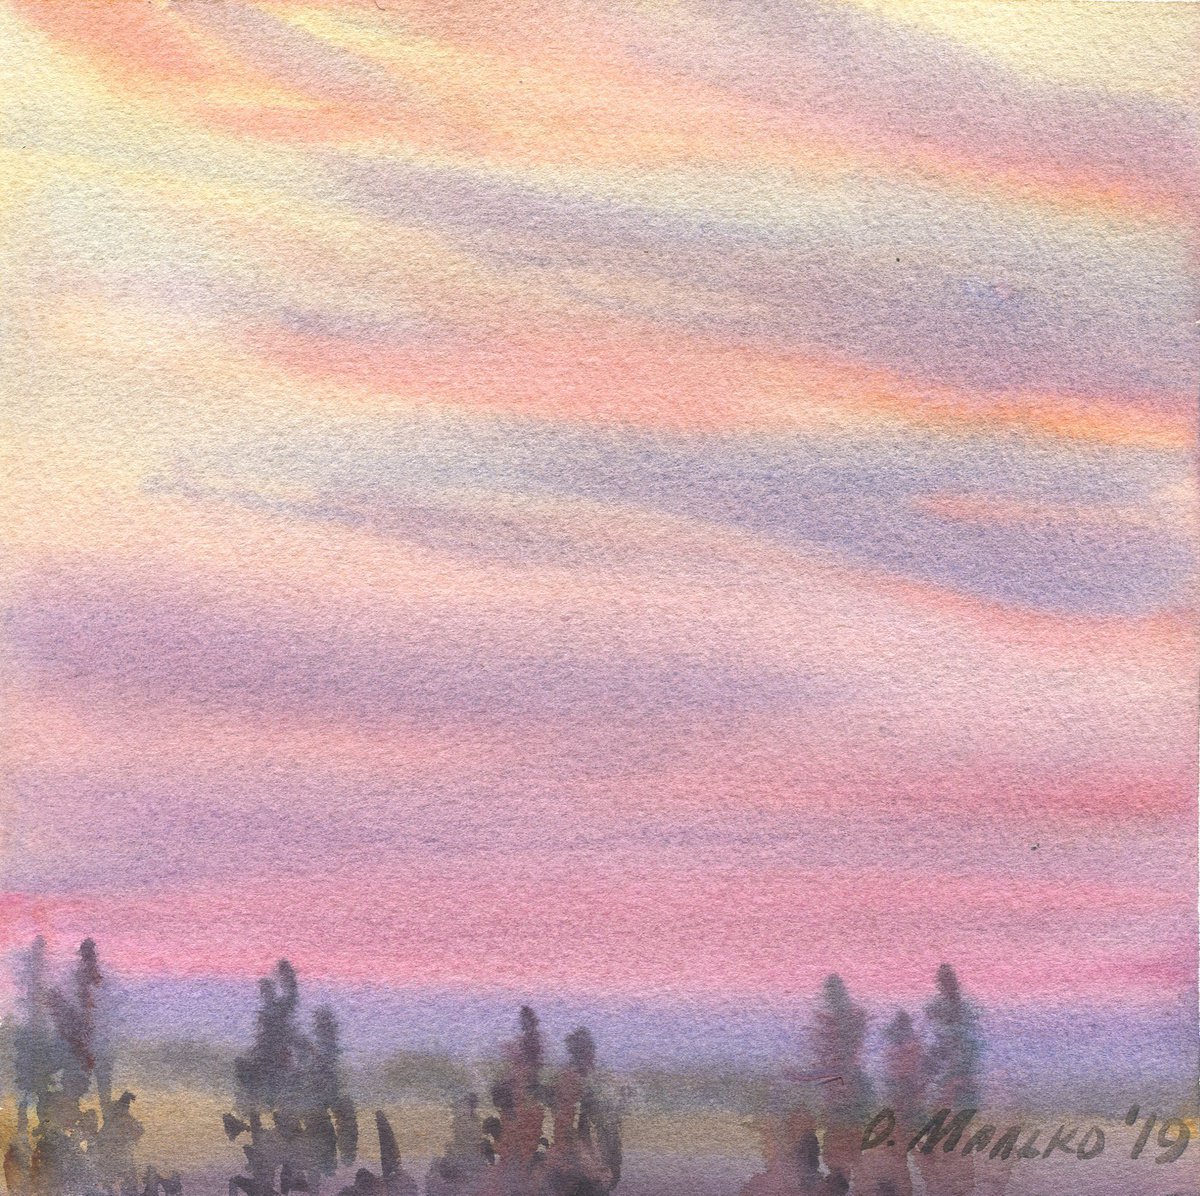 Sky 6 / Calm sunset Skyscape original watercolor Evening horizon by Olha Malko